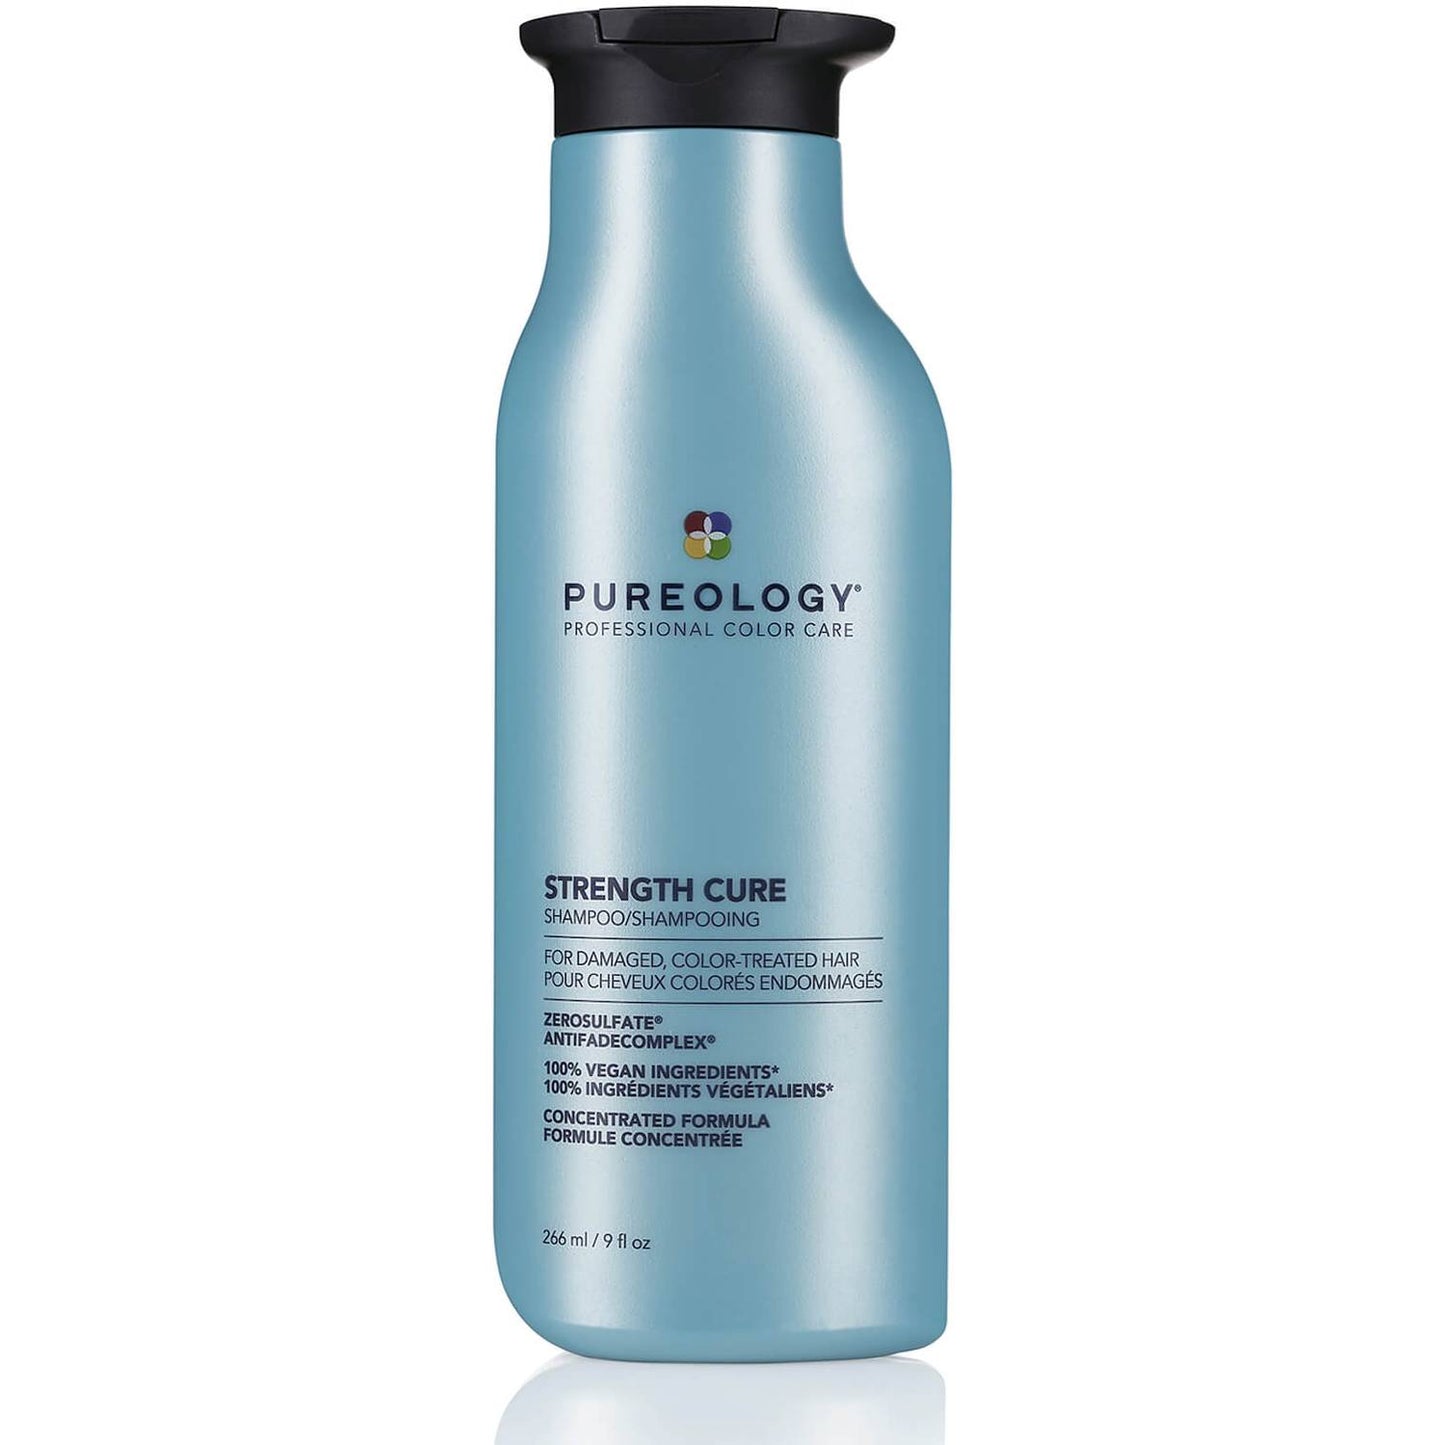 Pureology Strength Cure Shampoo 266ml - shelley and co